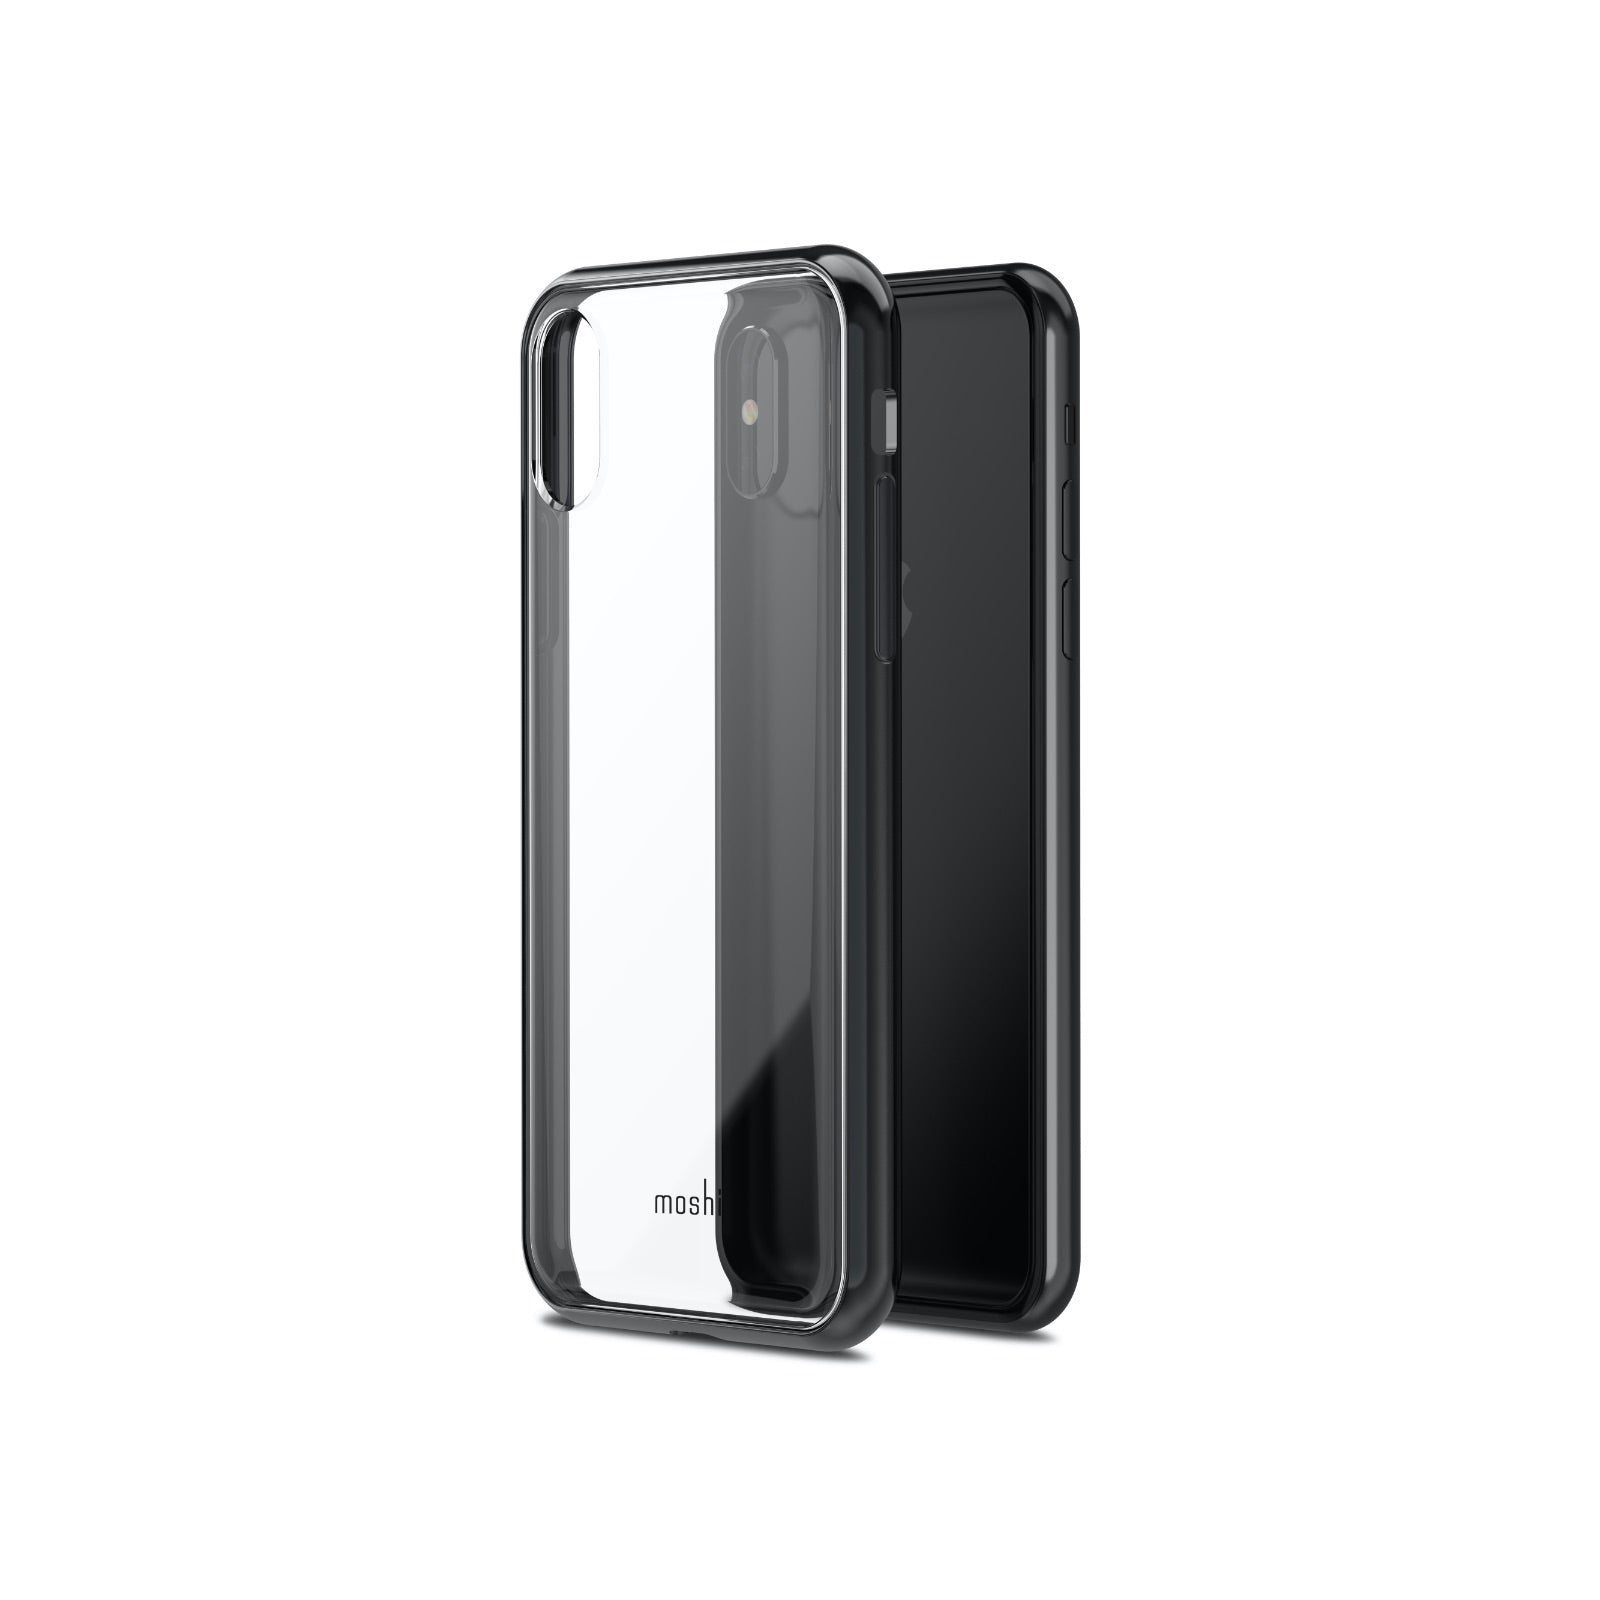 Cellairis case protector Transparente Ultra Clear para iPhone 13 Pro MAX -  FASHIONCEL